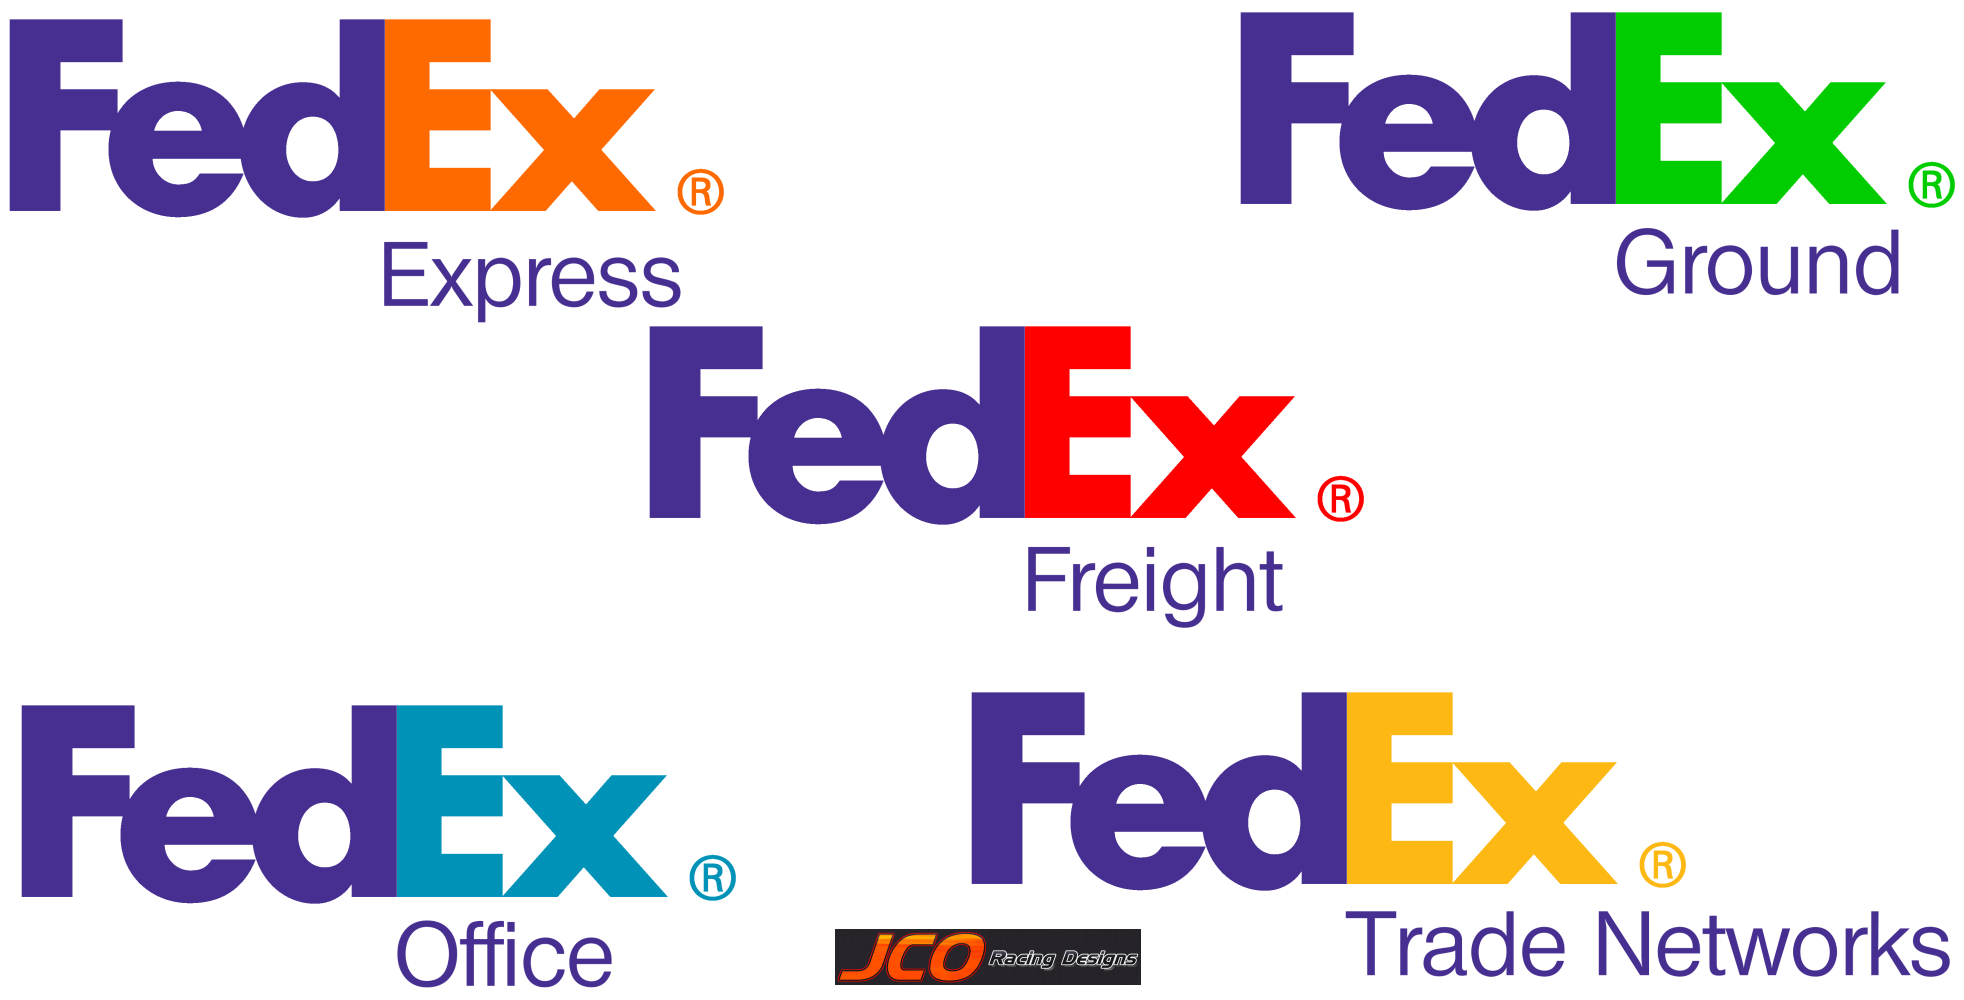 The fedex corporation